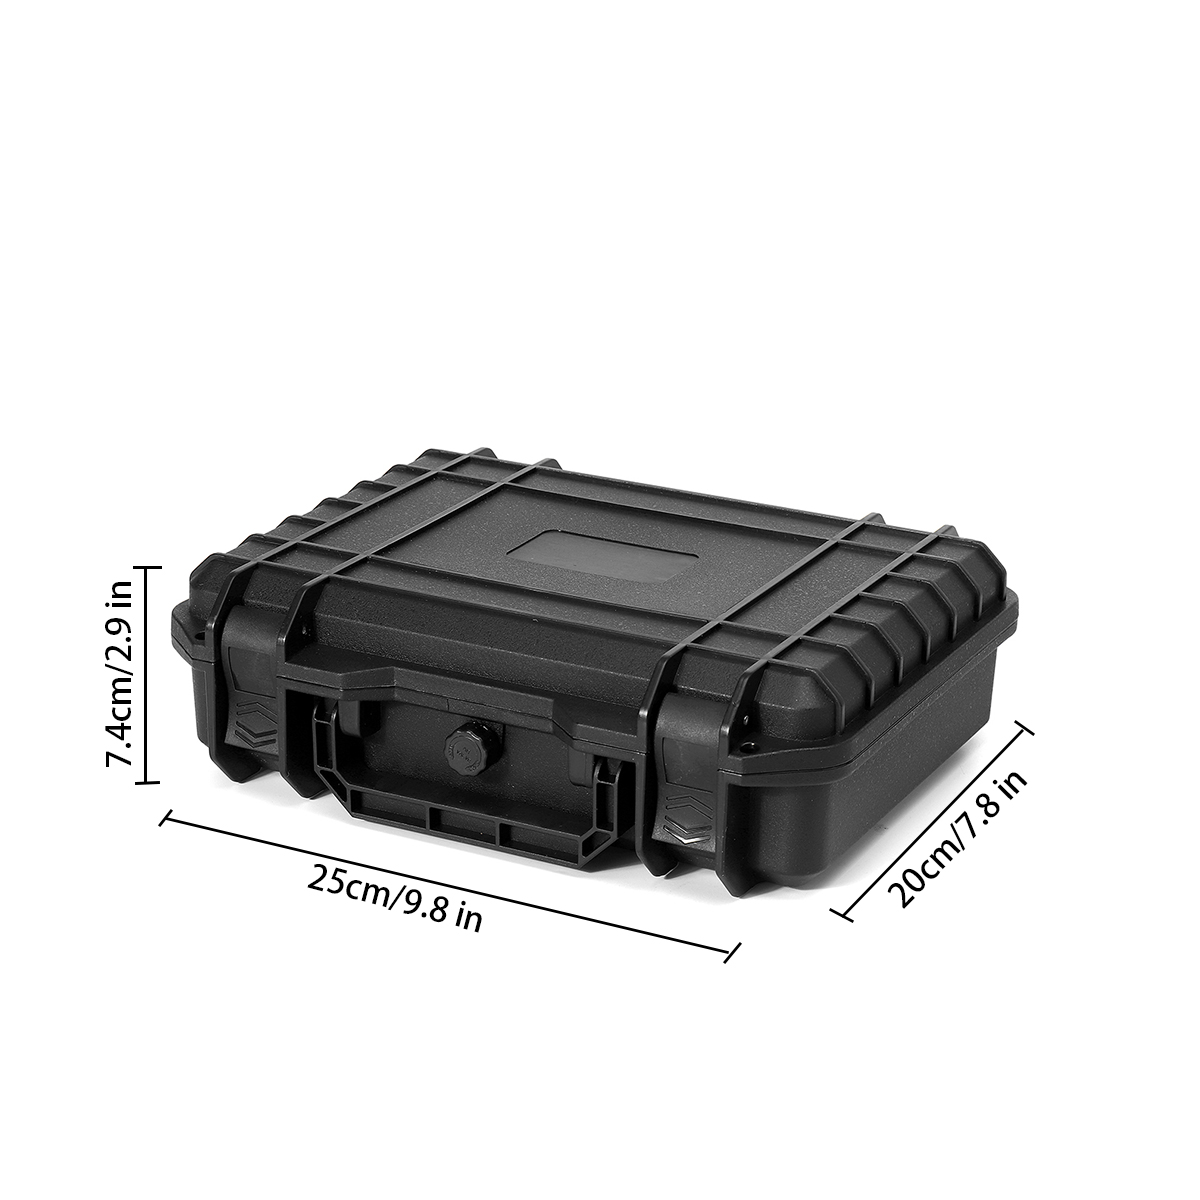 25020074mm-Waterproof-Hand-Carry-Tool-Case-Bag-Storage-Box-Camera-Photography-w-Sponge-1648371-2